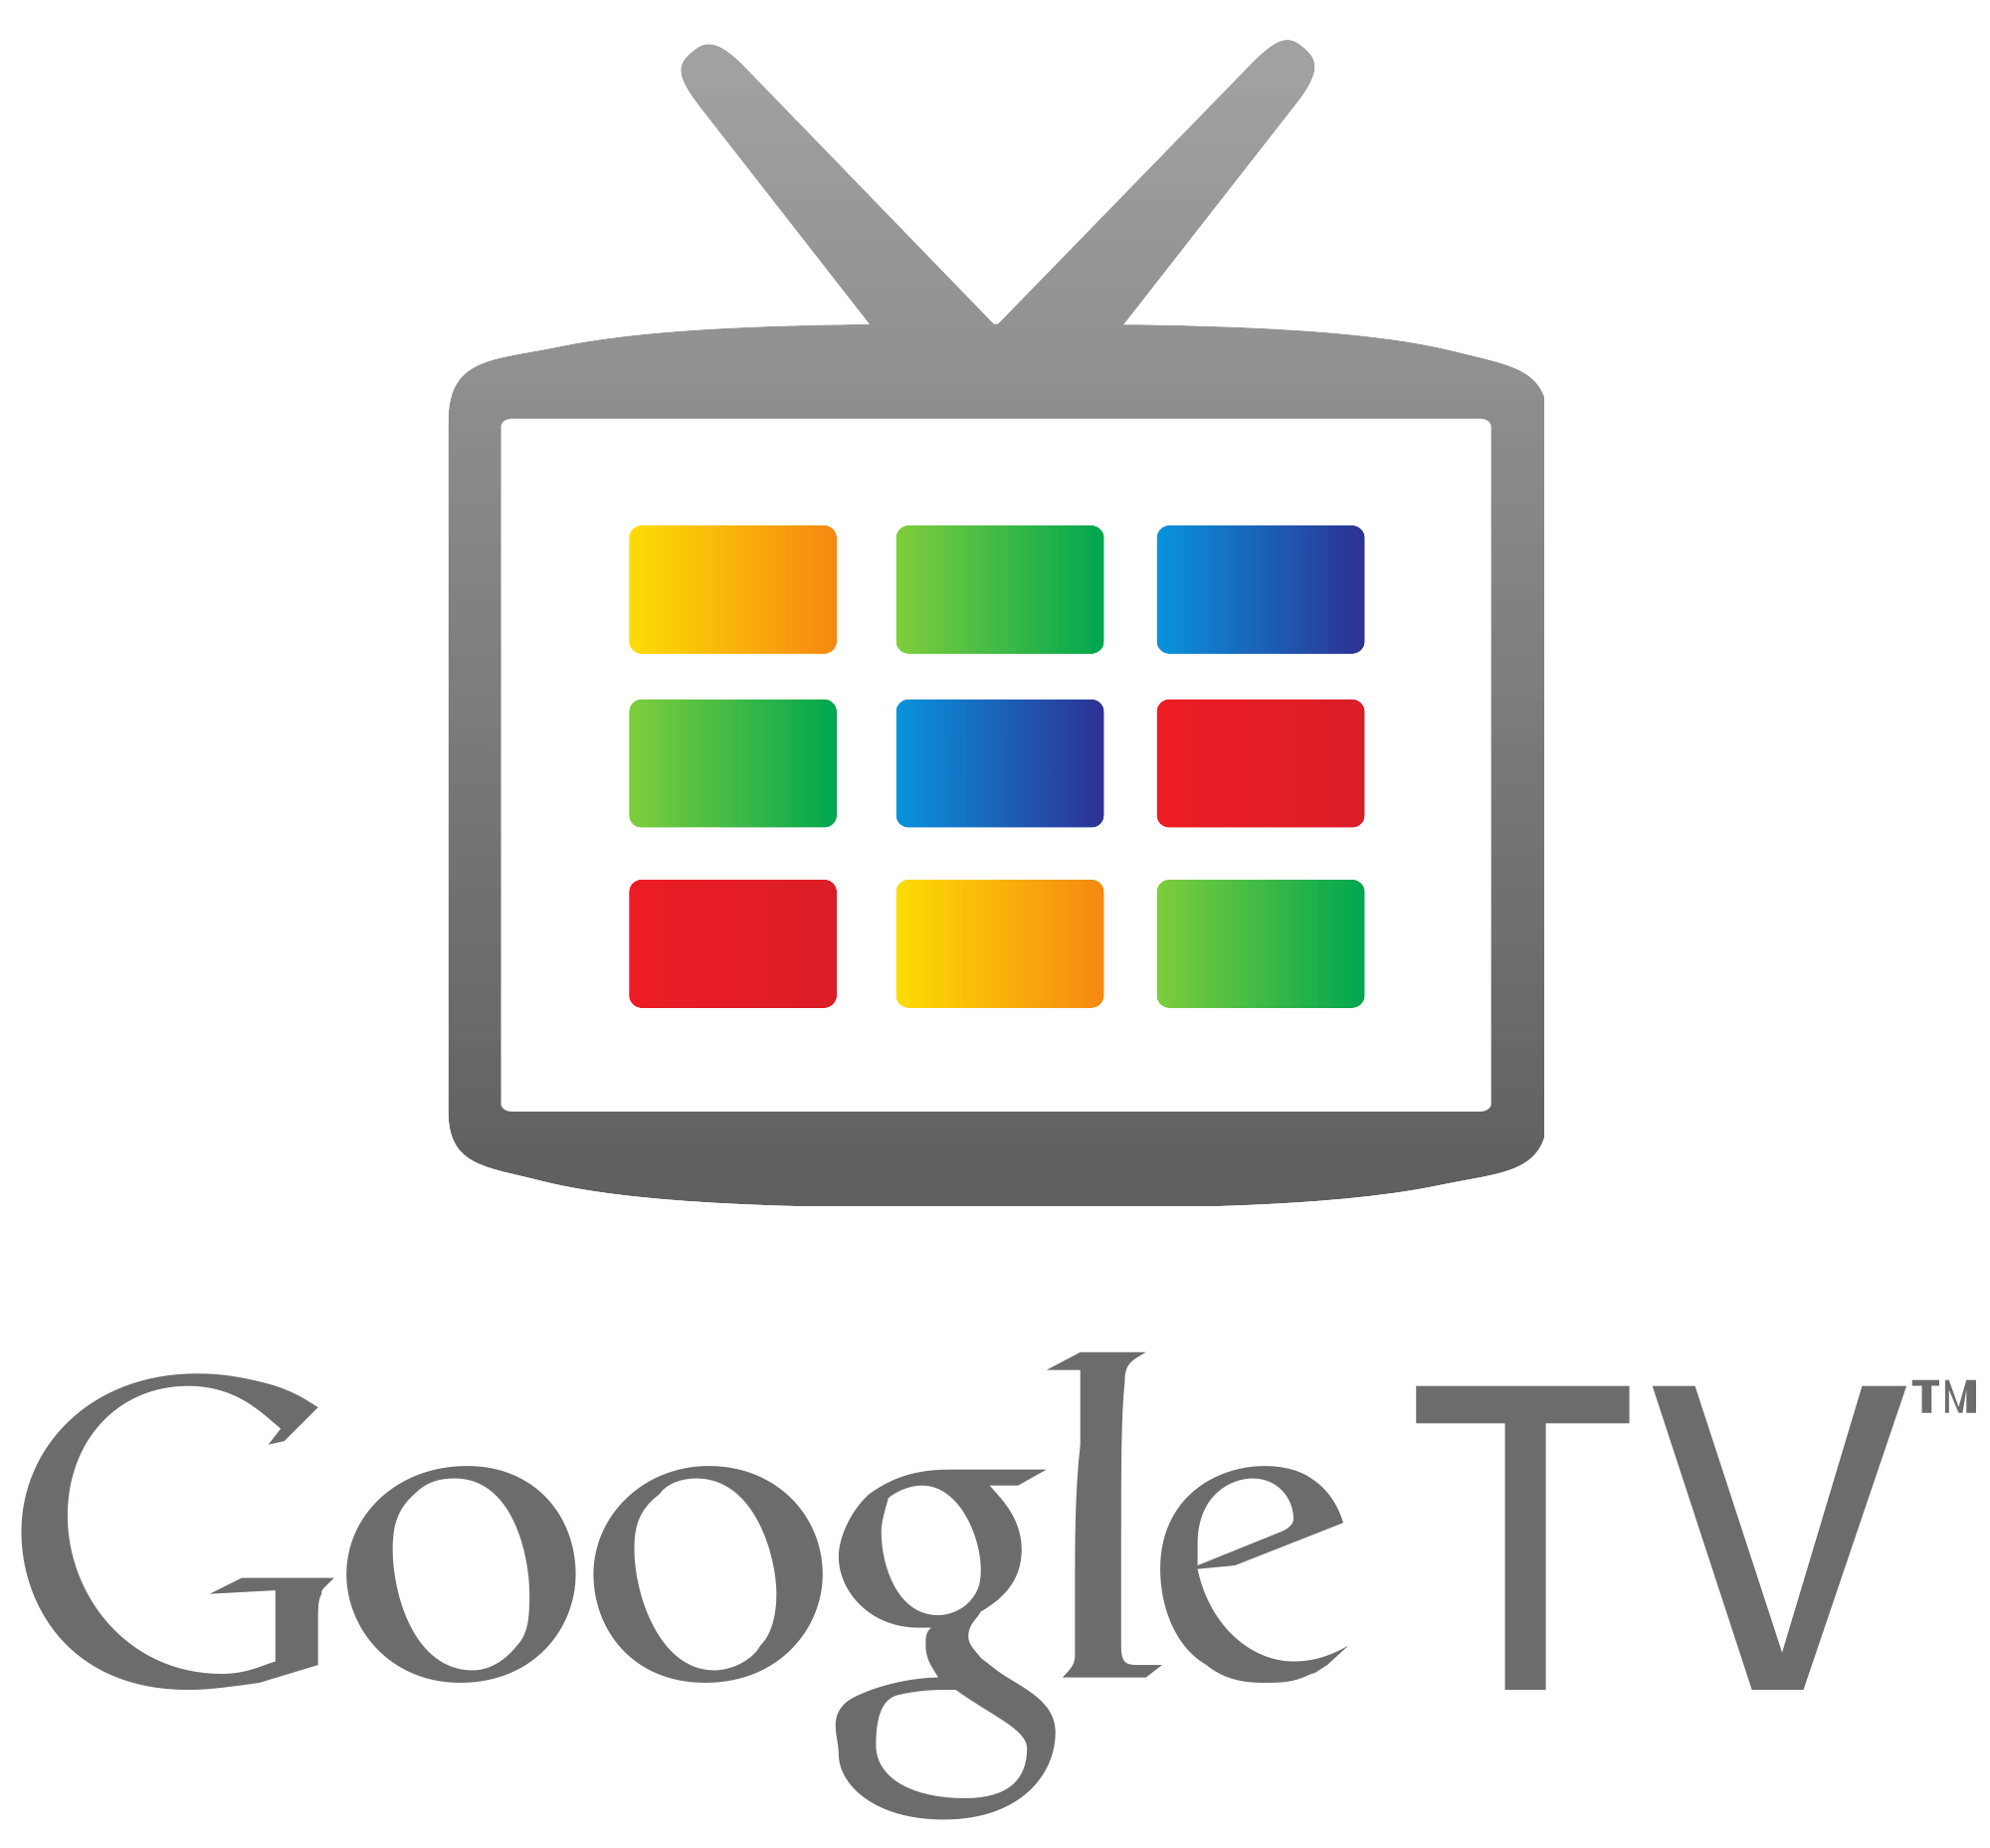 Google TV Logo - File:Google tv logo.svg - Wikimedia Commons